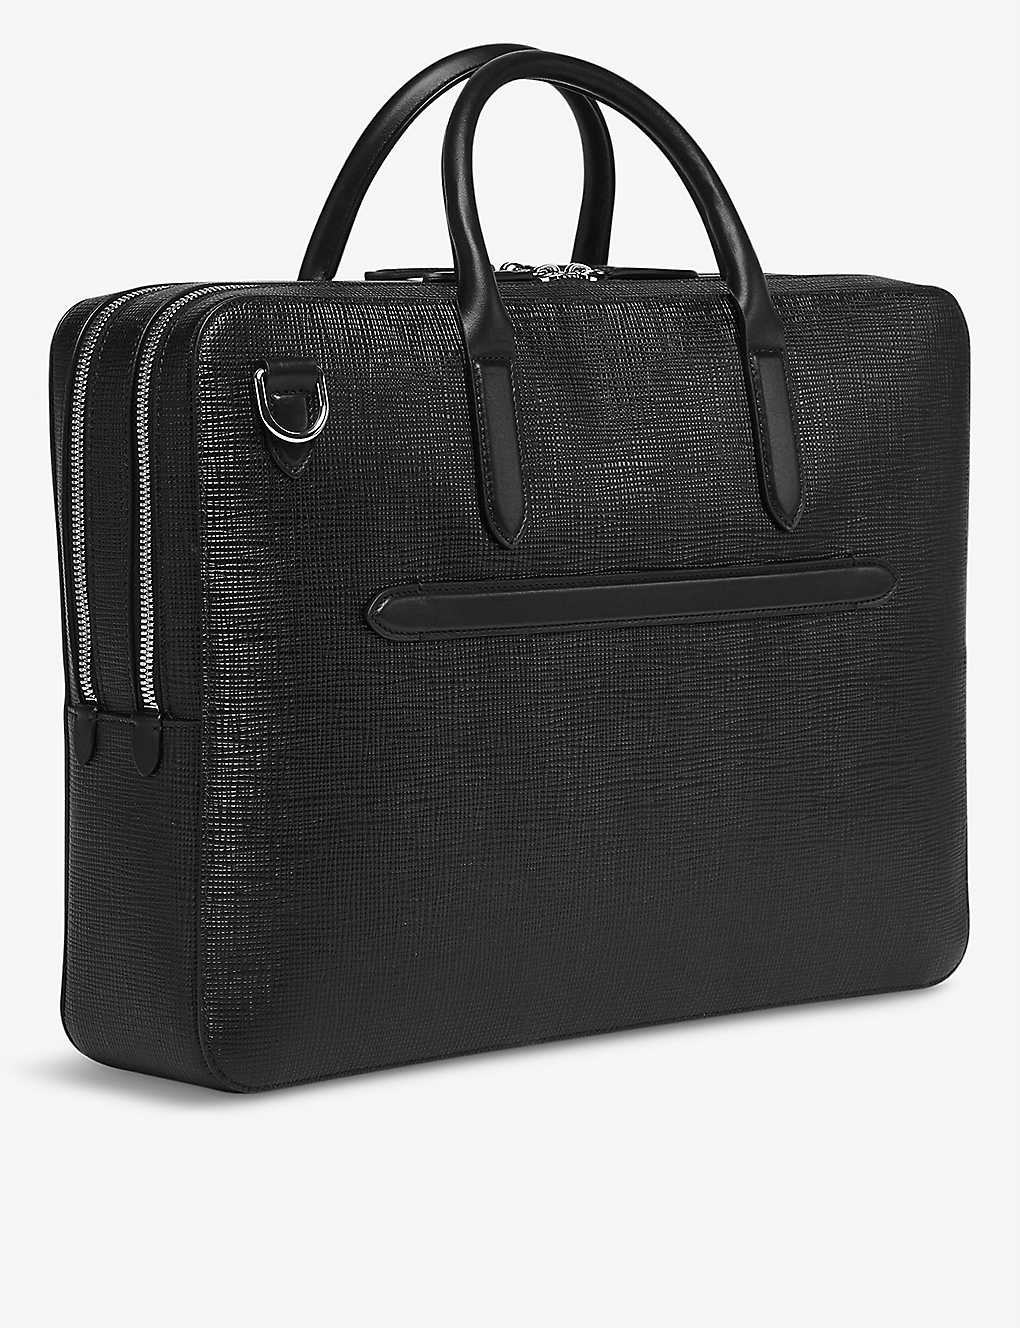 Panama large leather briefcase - 3